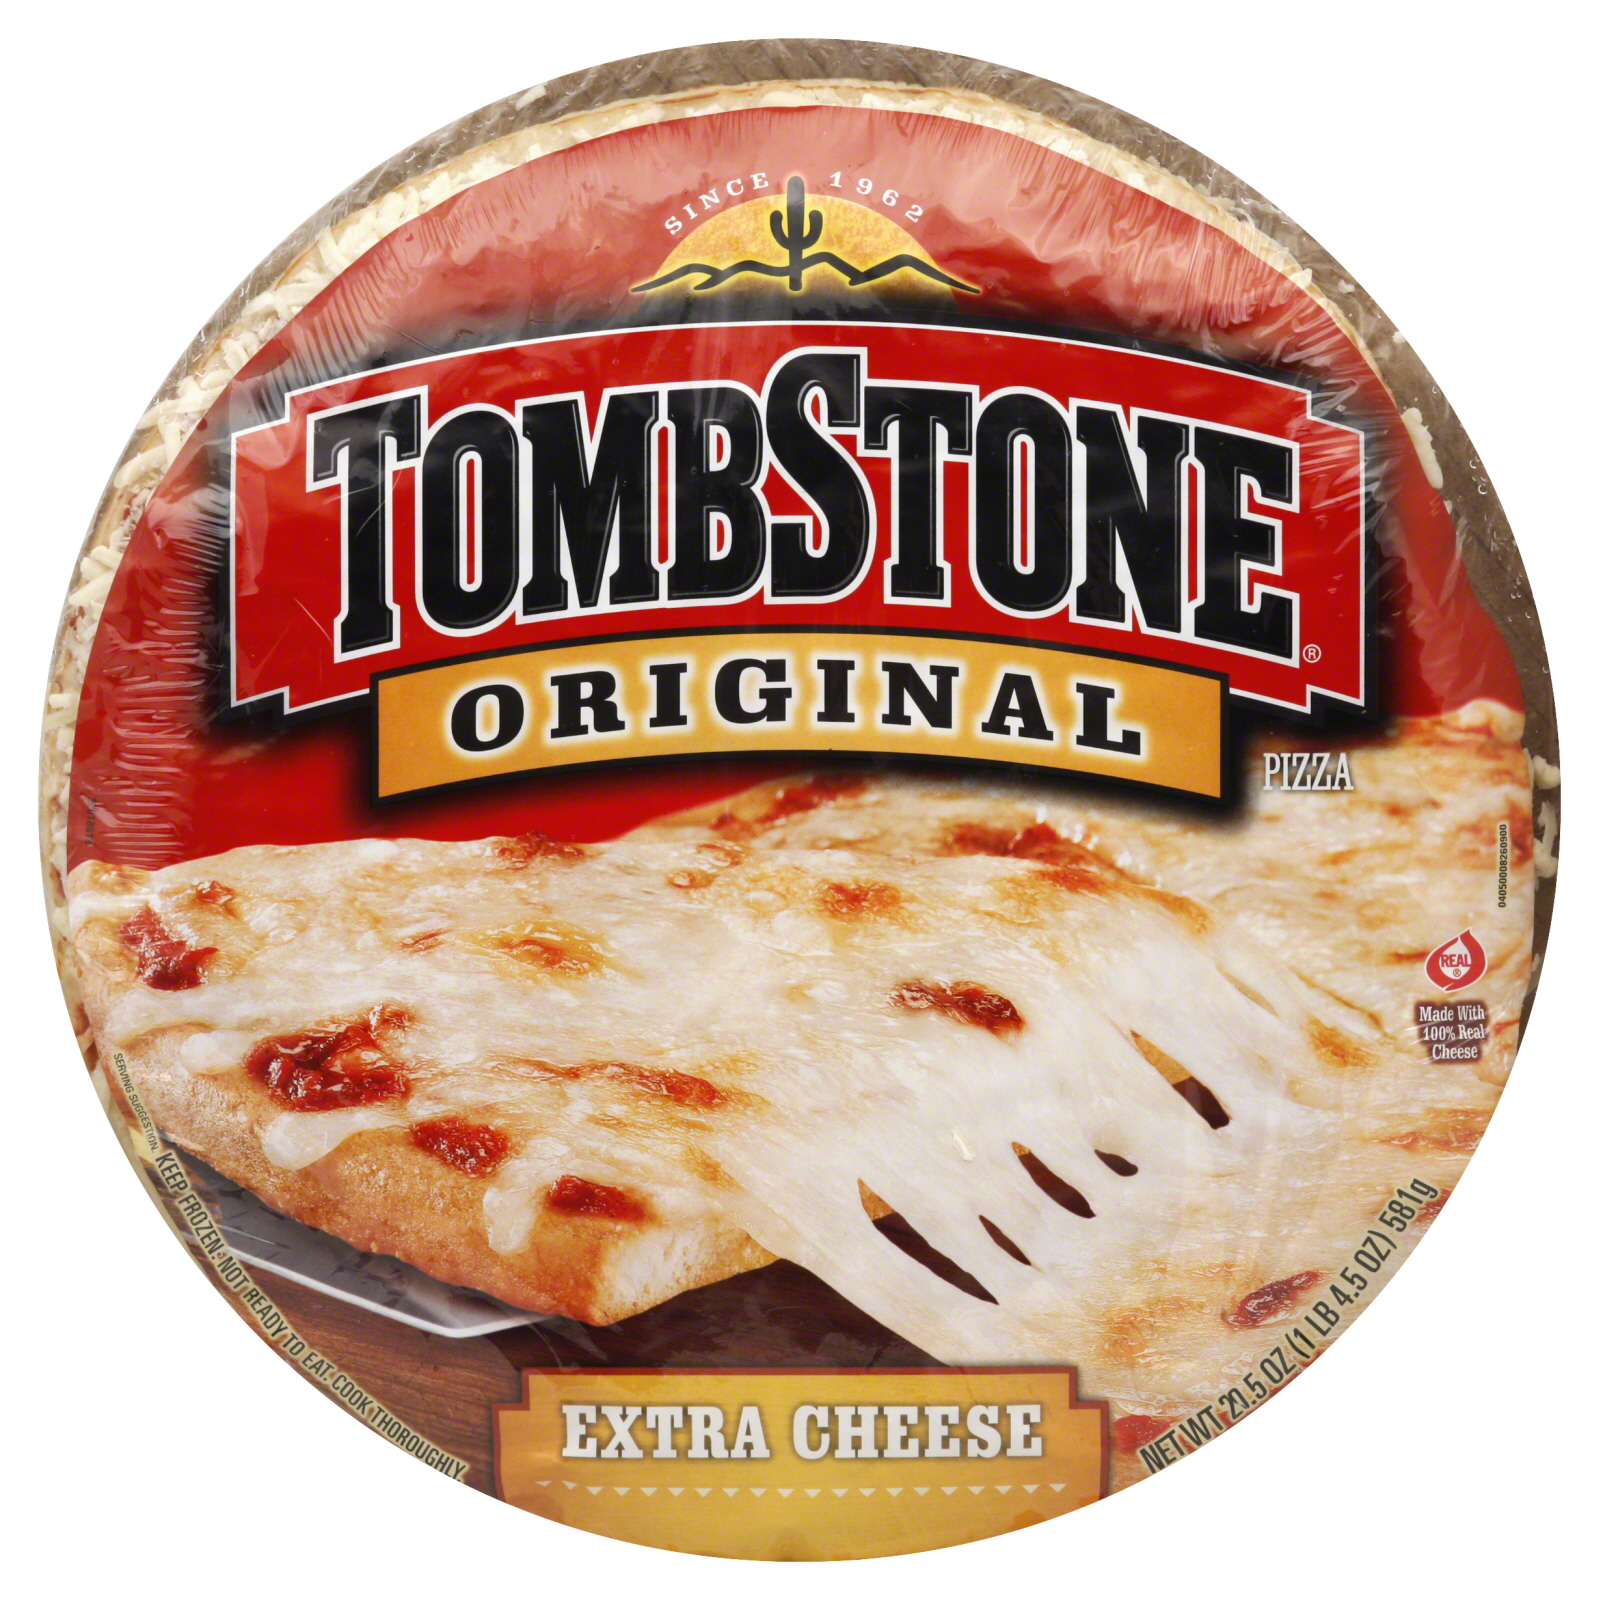 Tombstone Original Pizza, Extra Cheese, 20.5 oz (1 lb 4.5 oz) 581 g